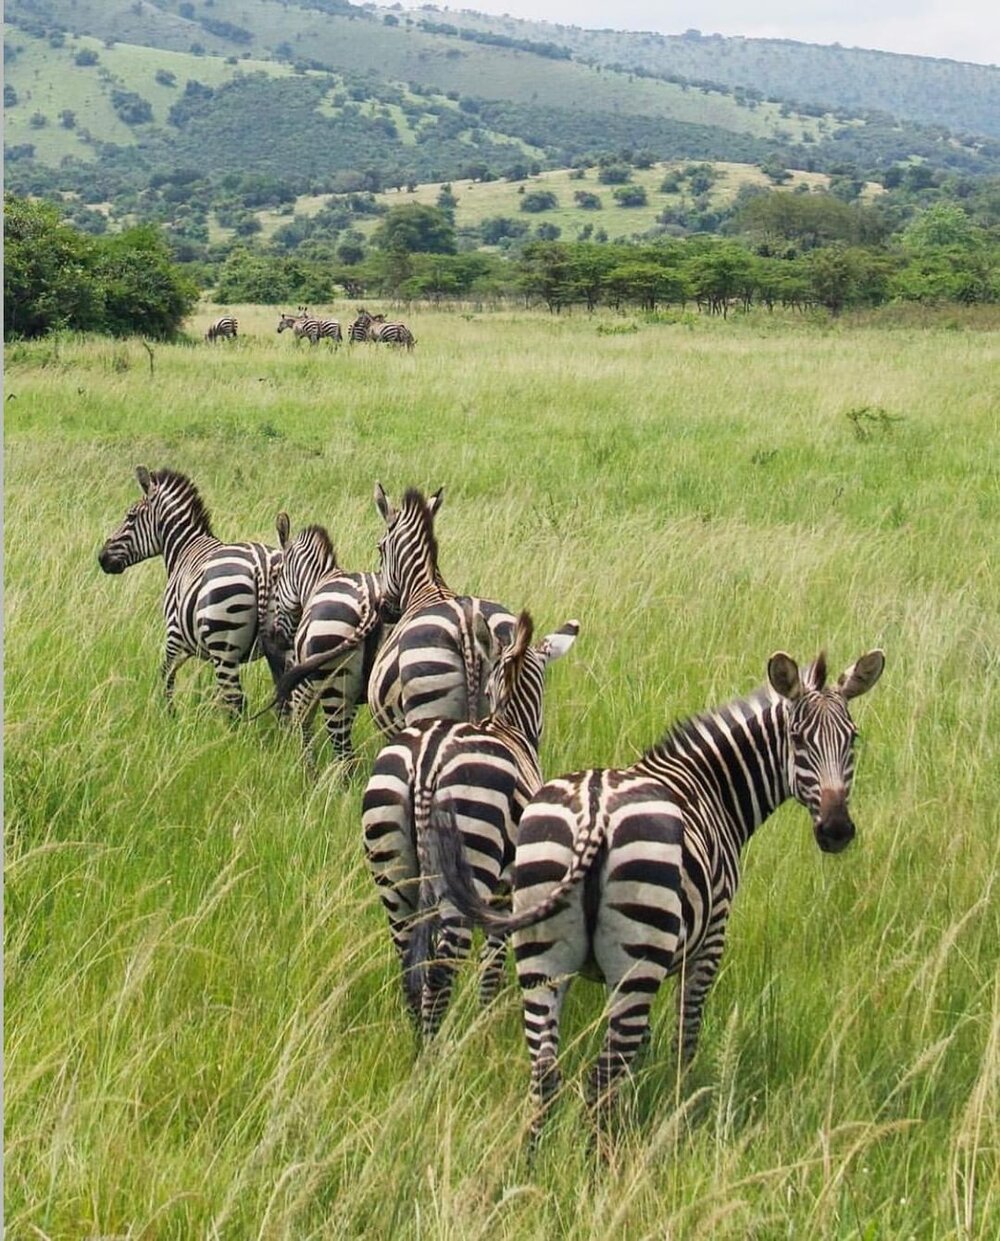 Zebras roaming the savannahs of the Akagera National Park. Image: SUITCASE.